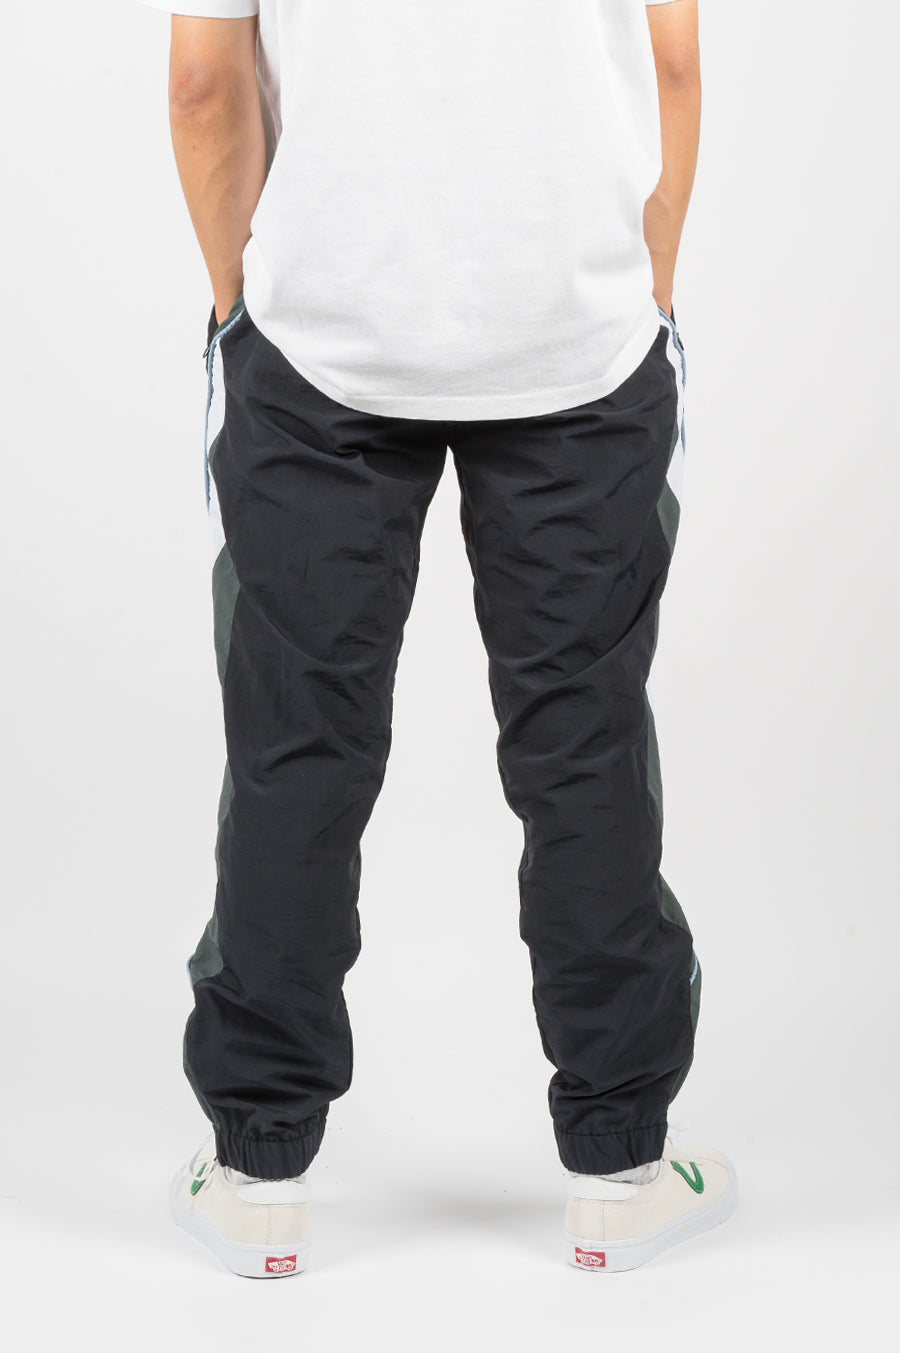 PEARL IZUMI Men's Pearl Track Pant, Black, Small : Running Pants :  Clothing, Shoes & Jewelry - Amazon.com